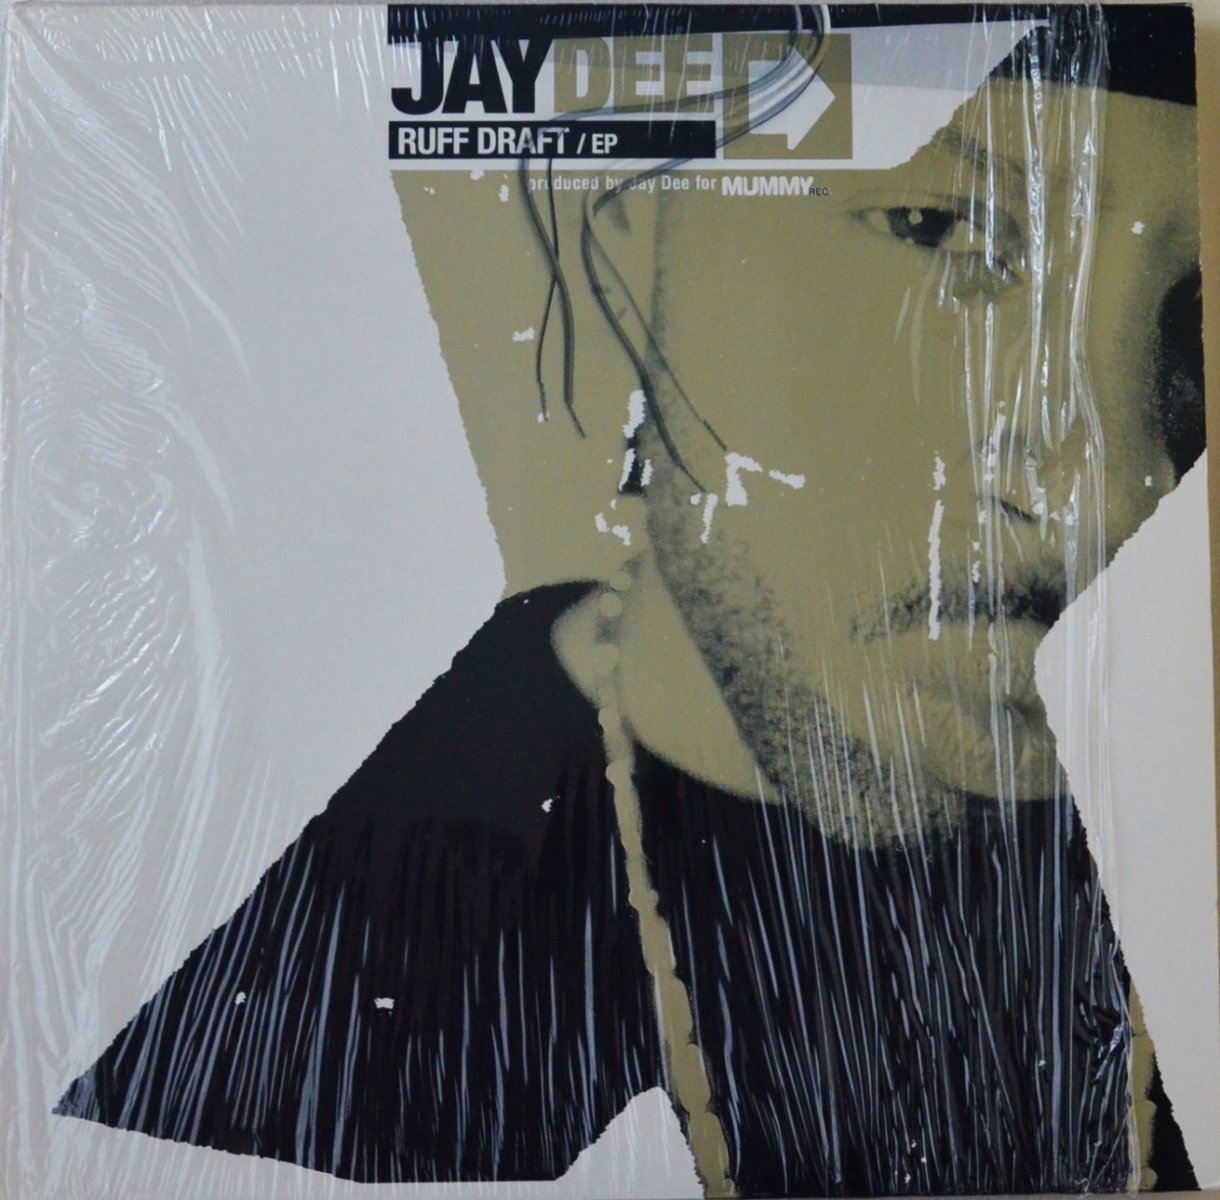 JAY DEE / RUFF DRAFT EP (12